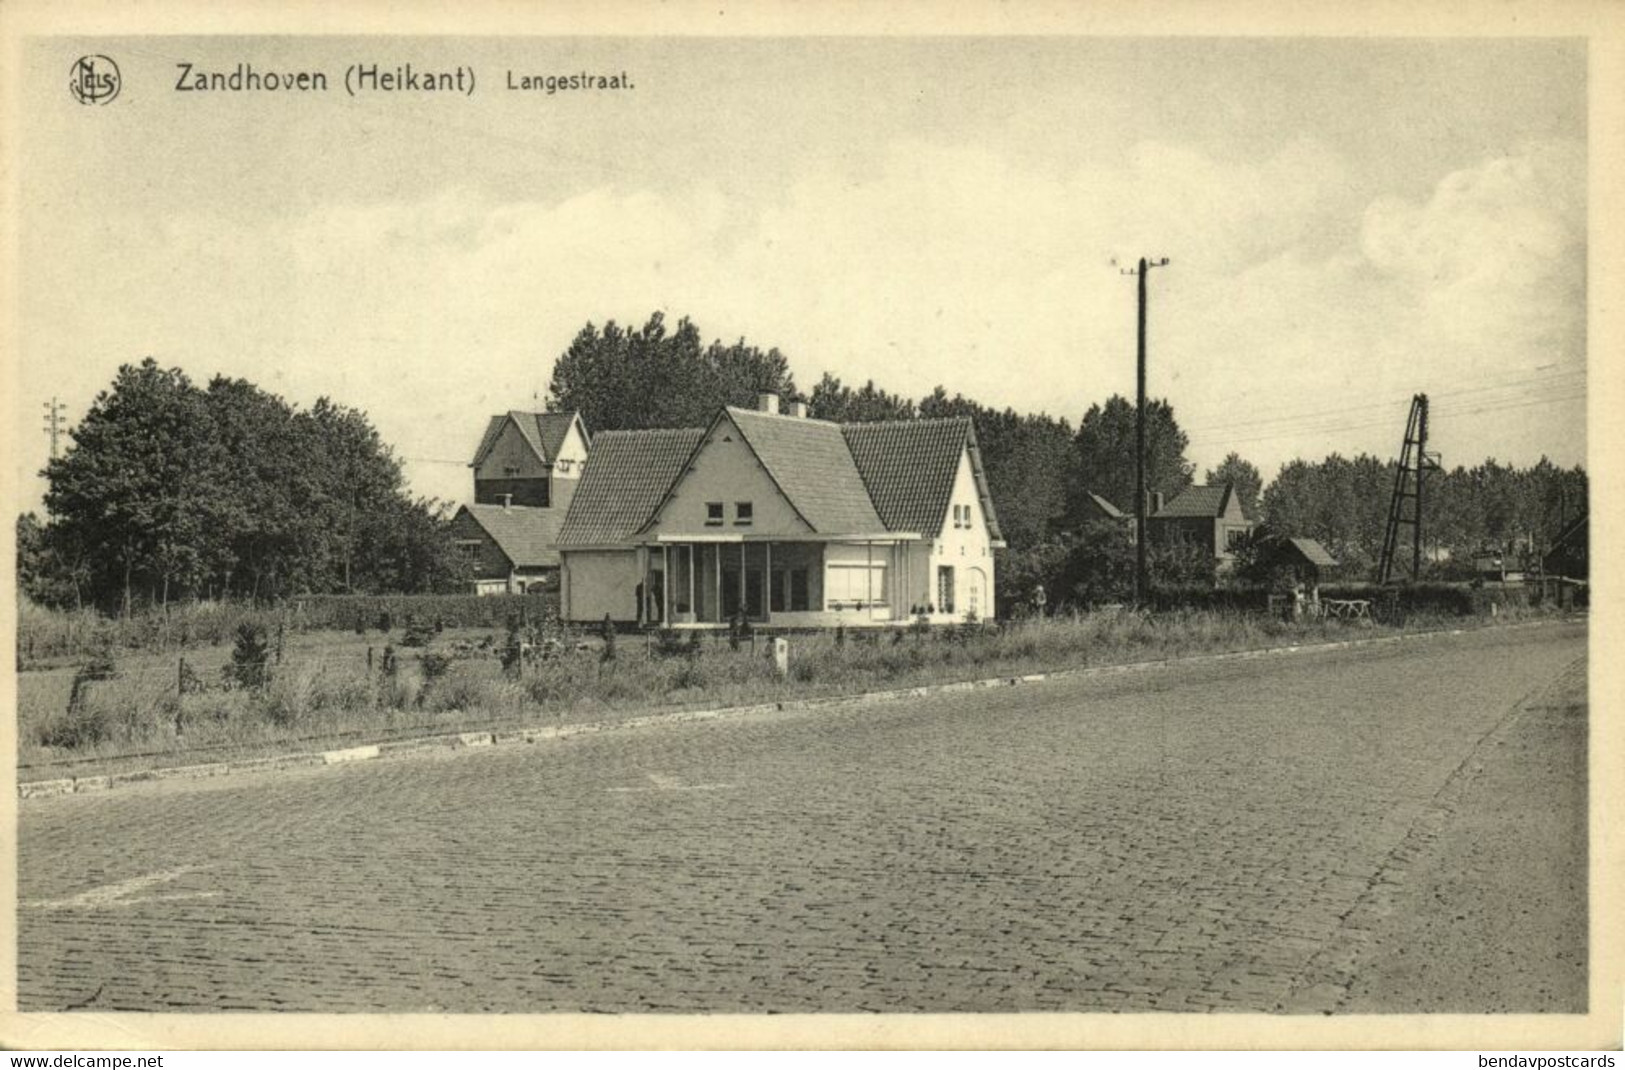 Belgium, ZANDHOVEN, Heikant, Langstraat (1950s) Postcard - Zandhoven